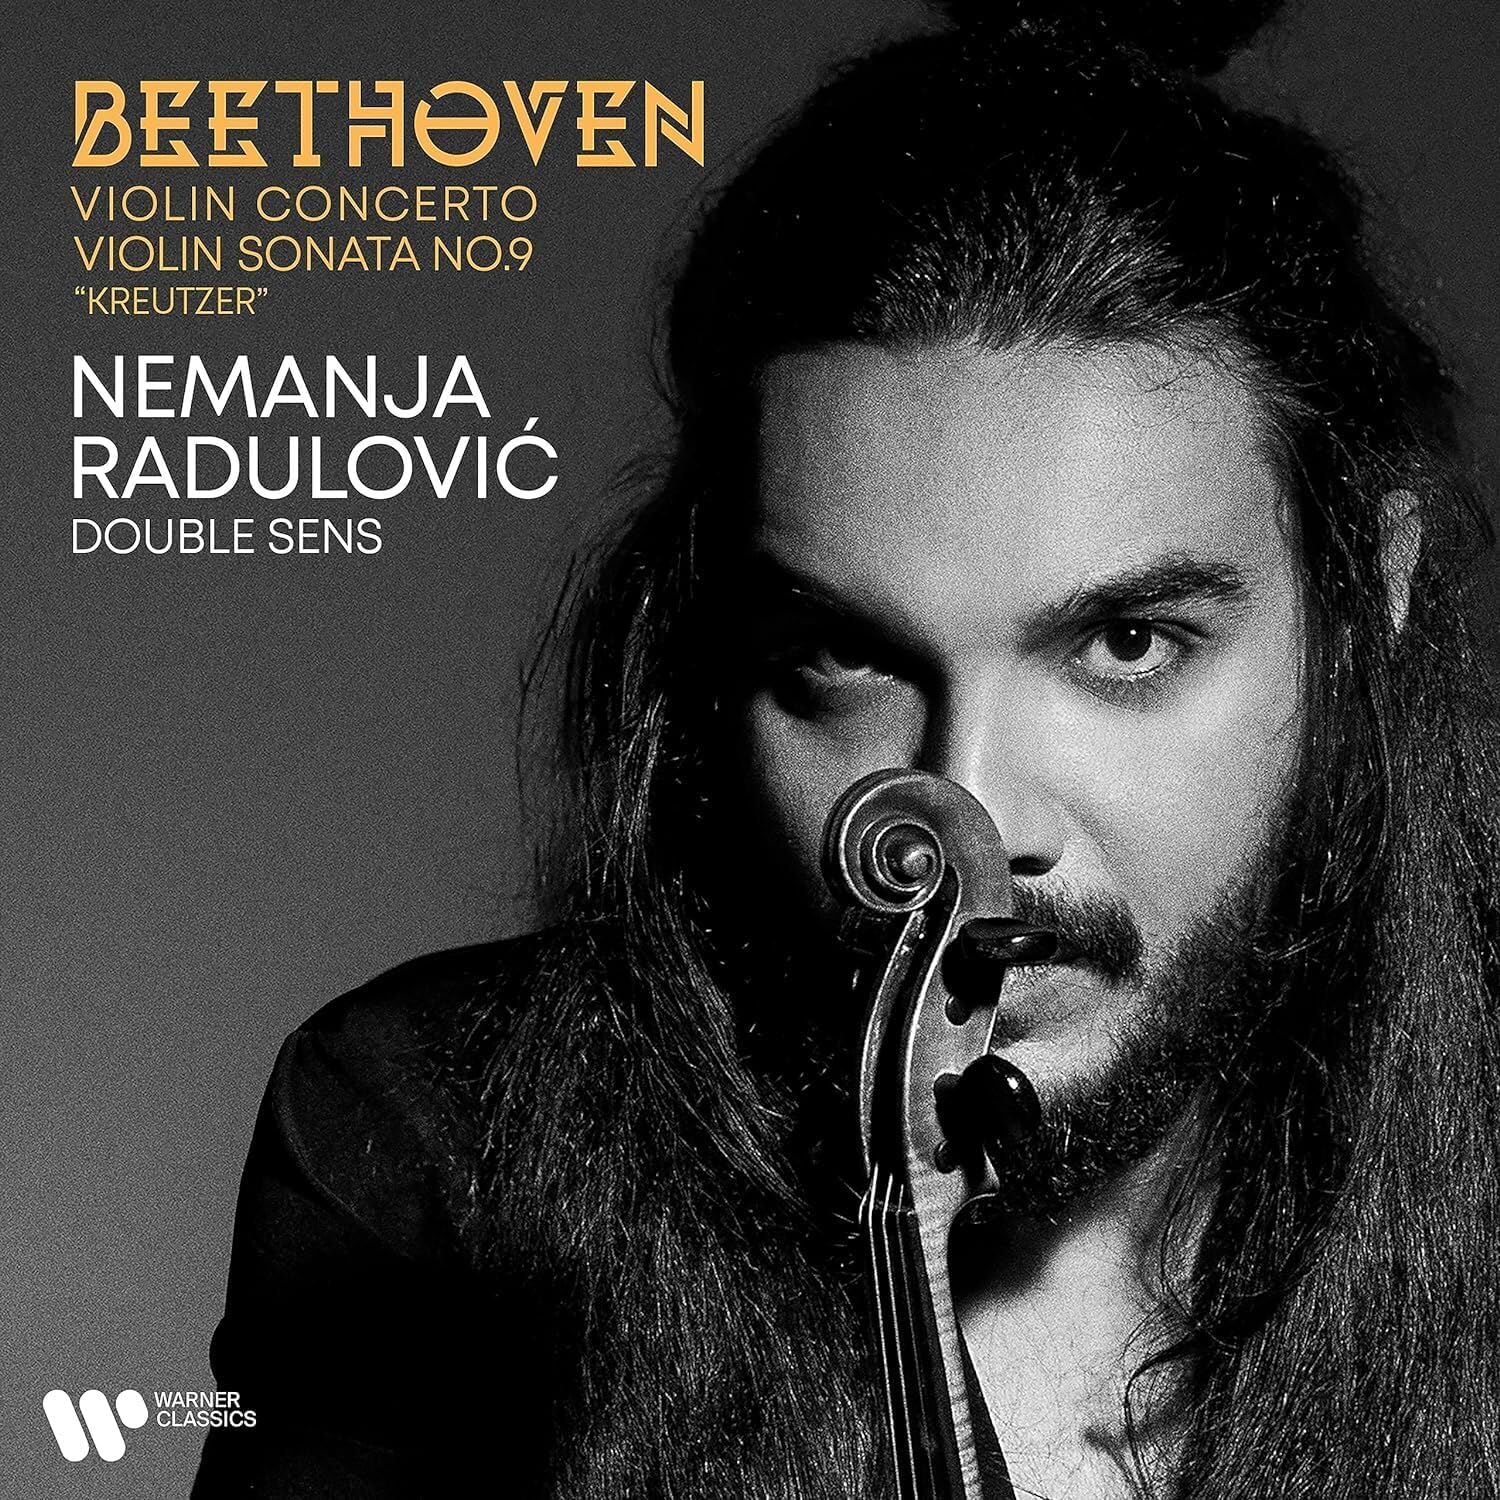 Beethoven: Violin Concerto/Violin Sonata No. 9 "Kreutzer" | Nemanja Radulovic, Double Sens